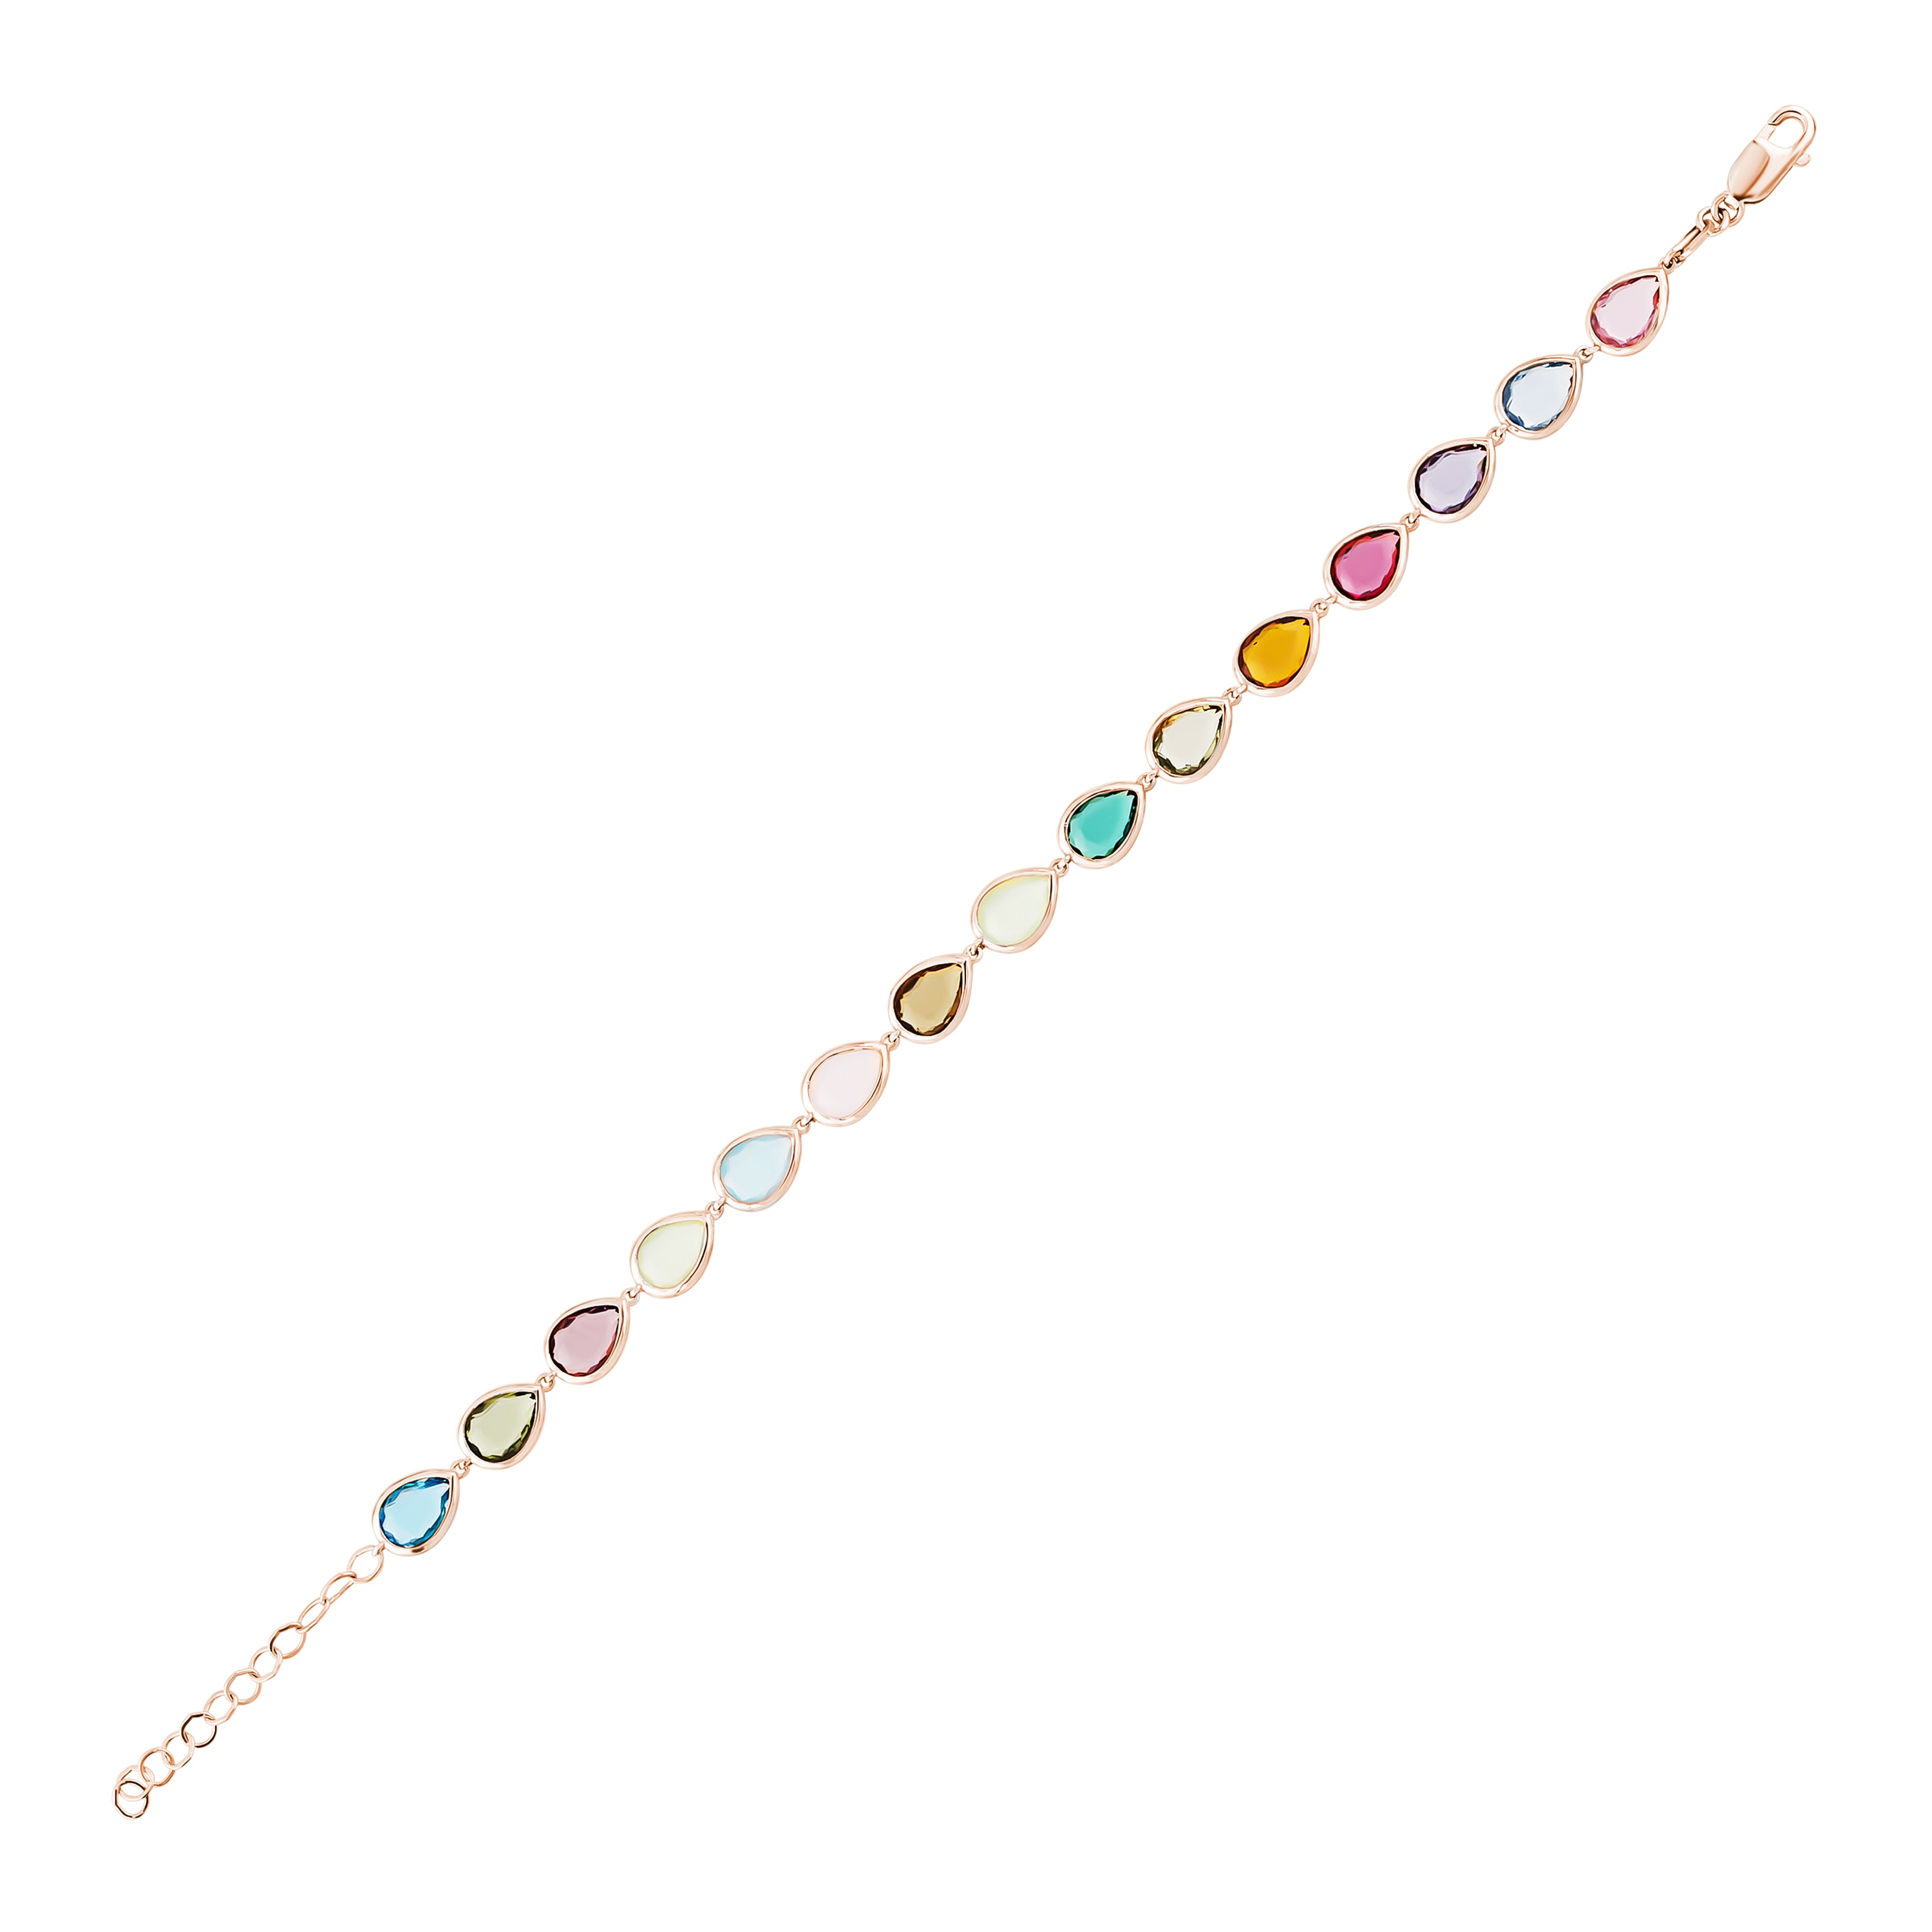 Silver Bracelet Festival Collection Special Design Mix Colors 925 Sterling